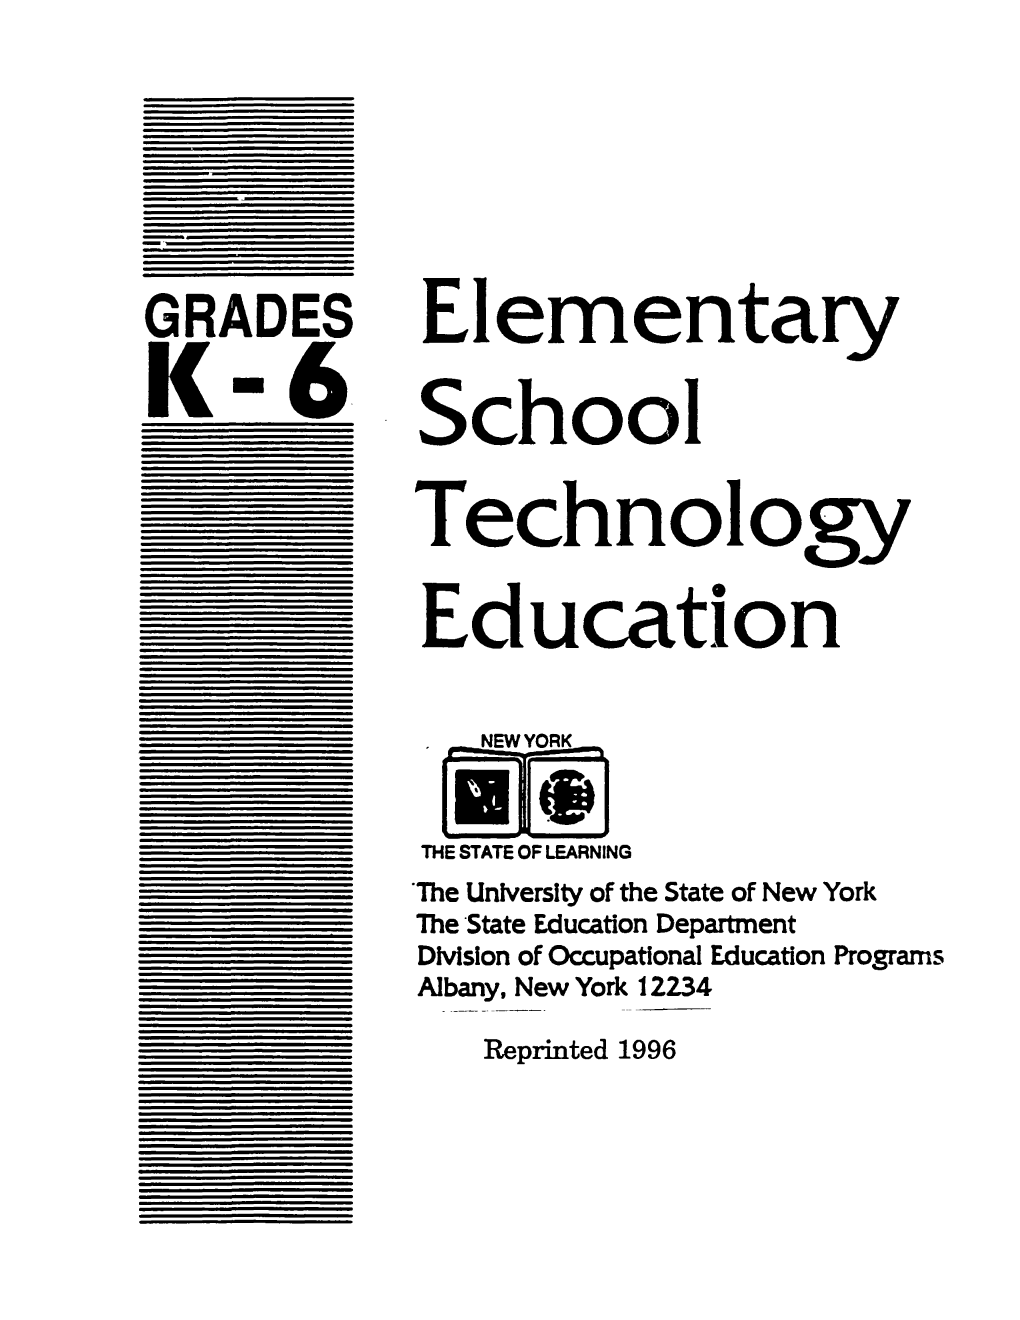 Elementary School Technology Education Grades K